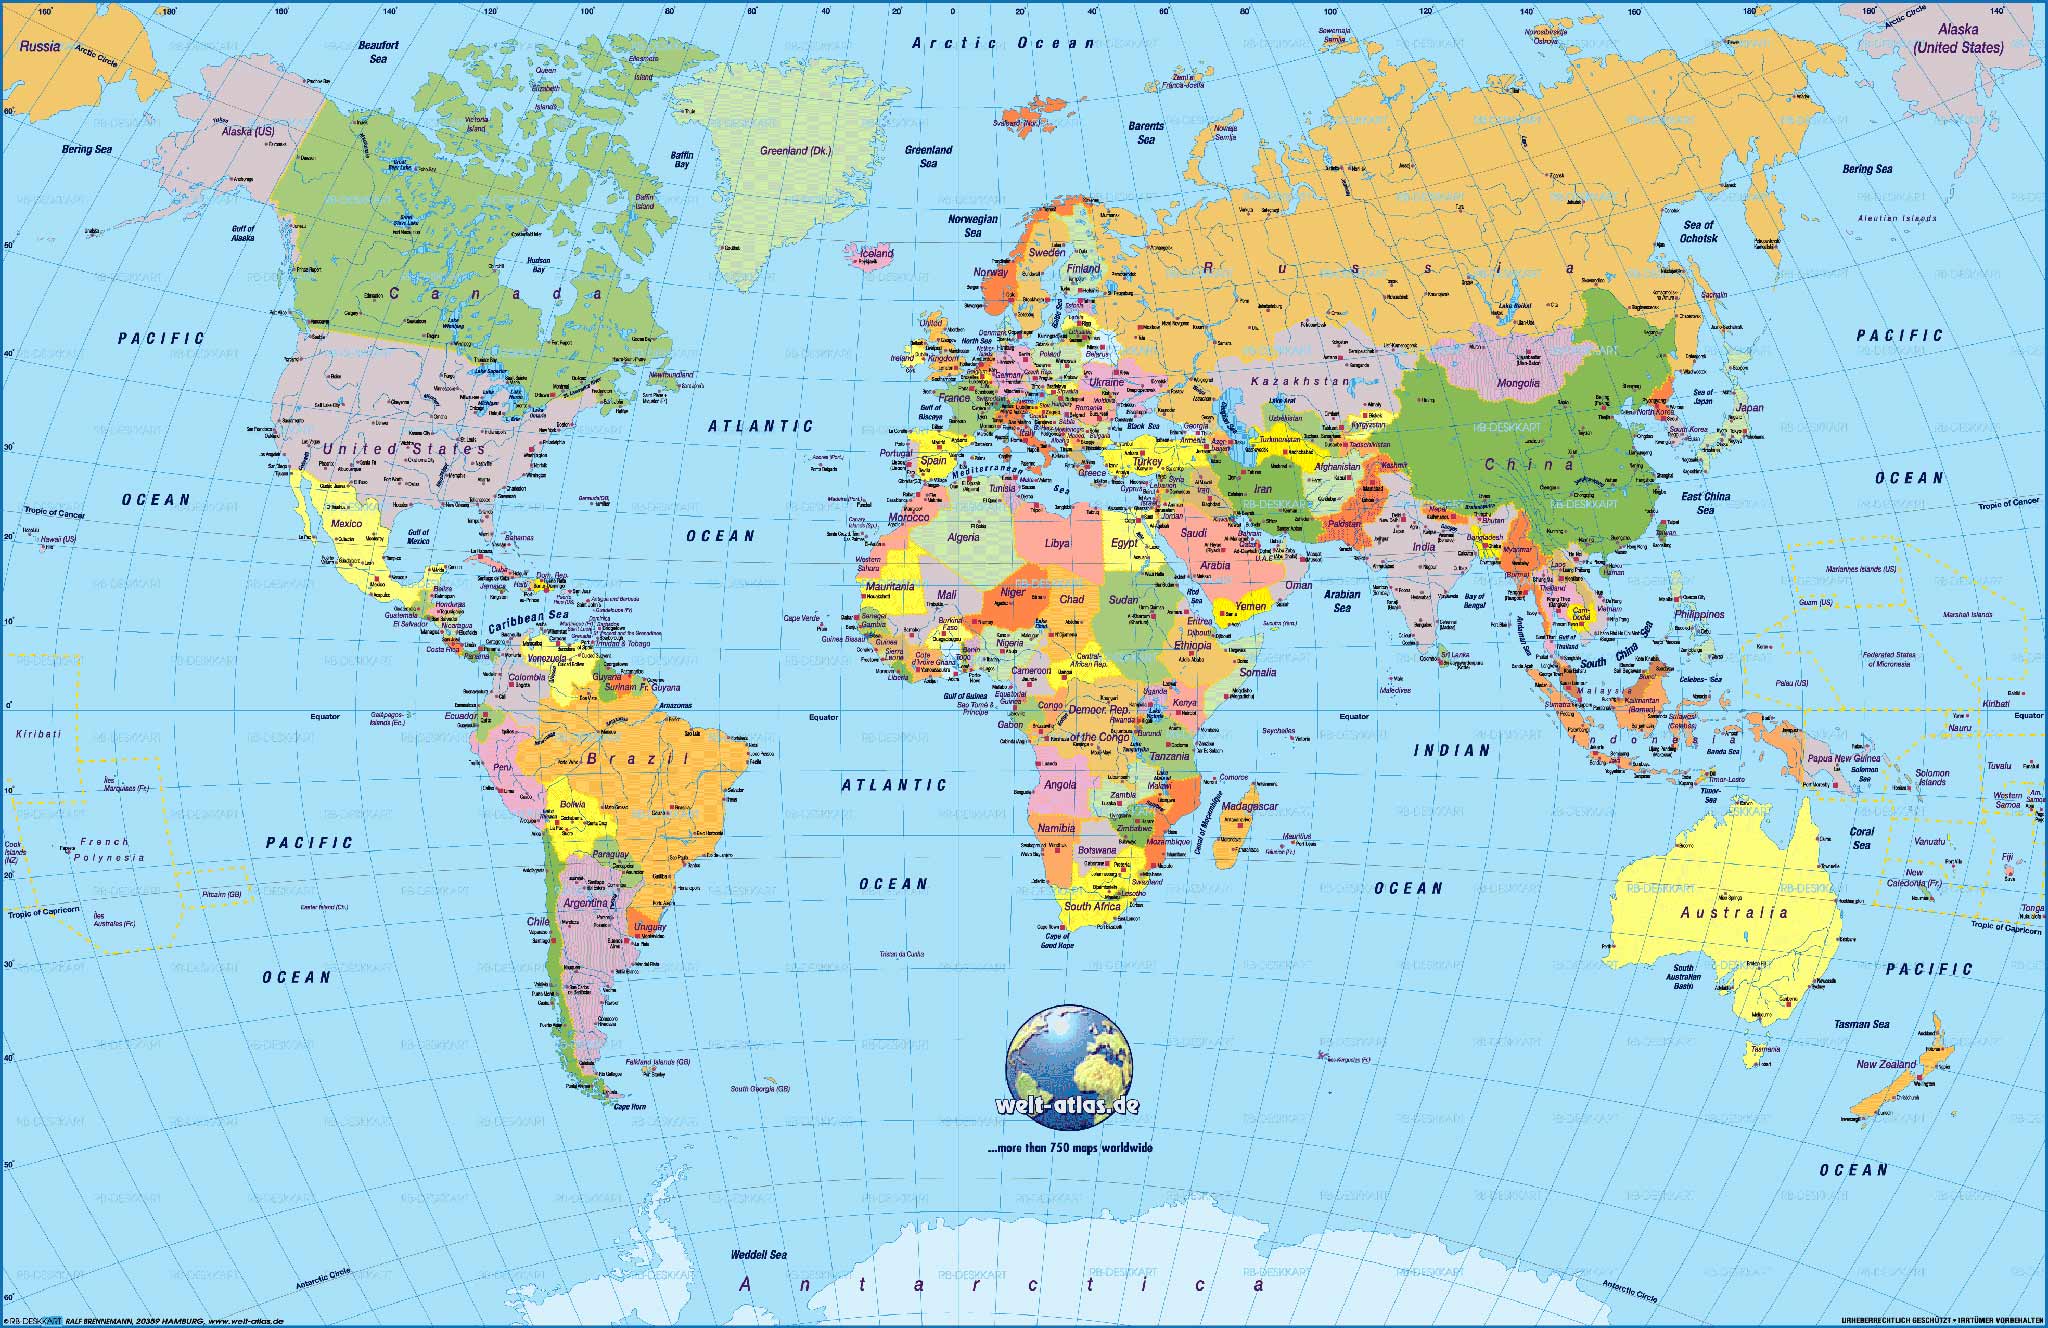 Dünya Siyasi Haritası İngilizce